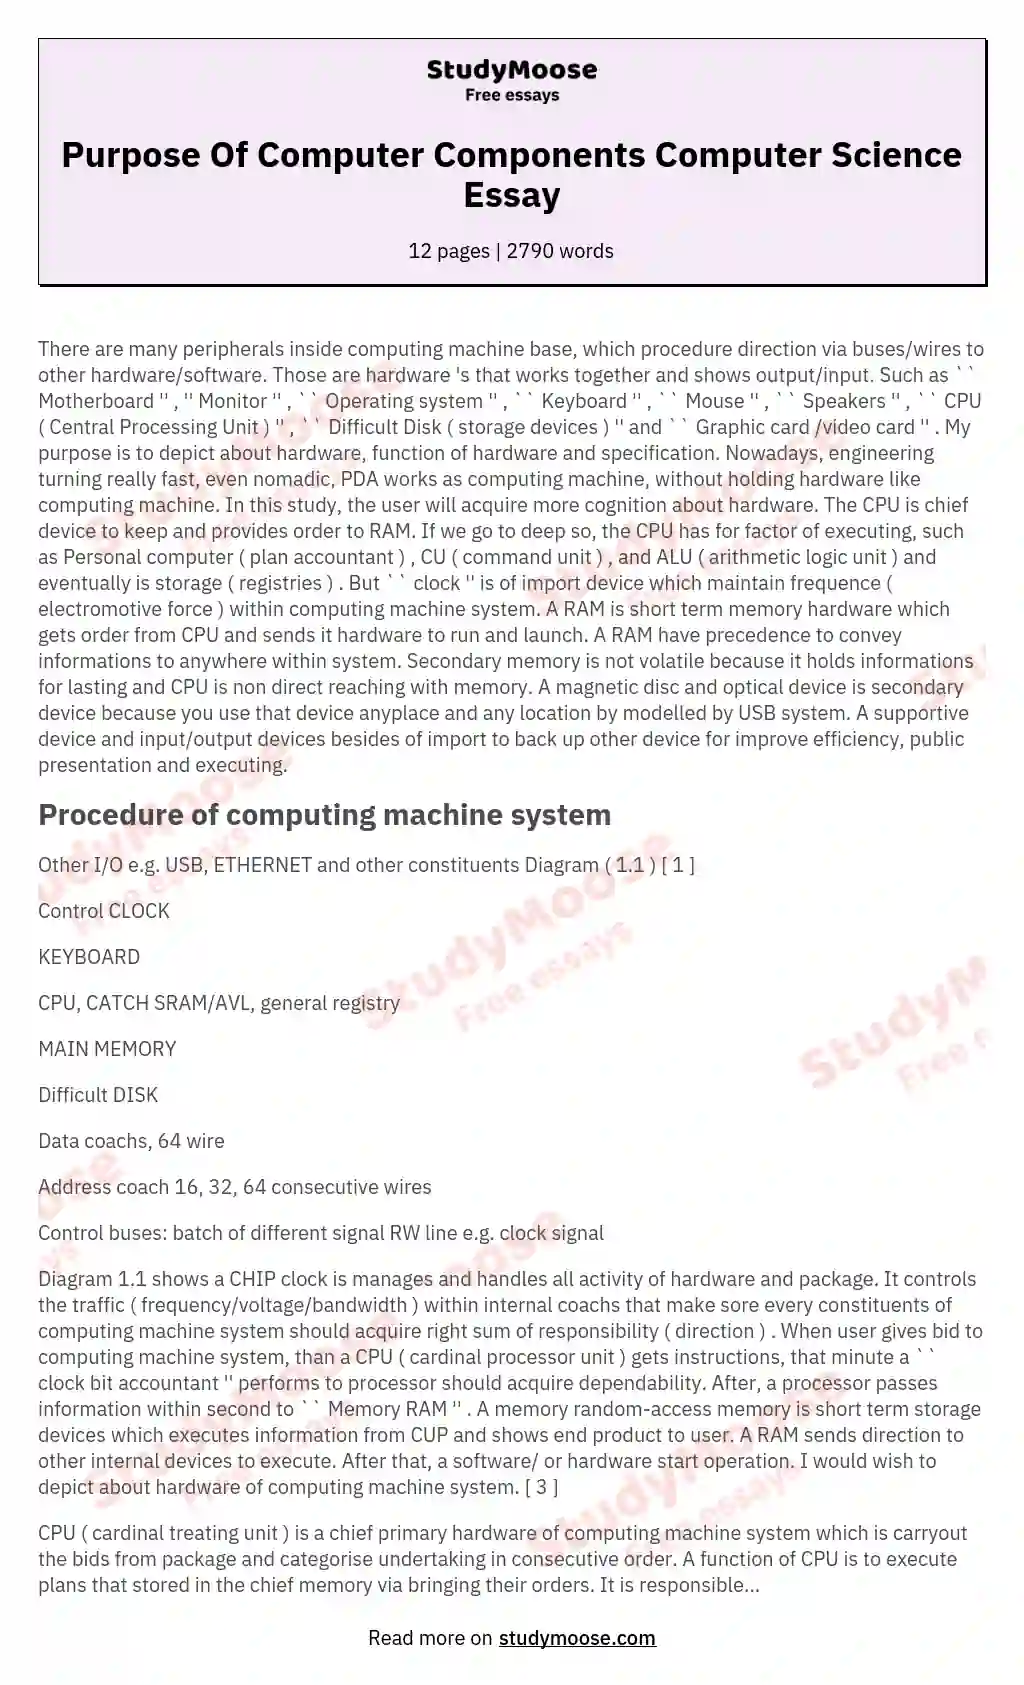 Purpose Of Computer Components Computer Science Essay essay